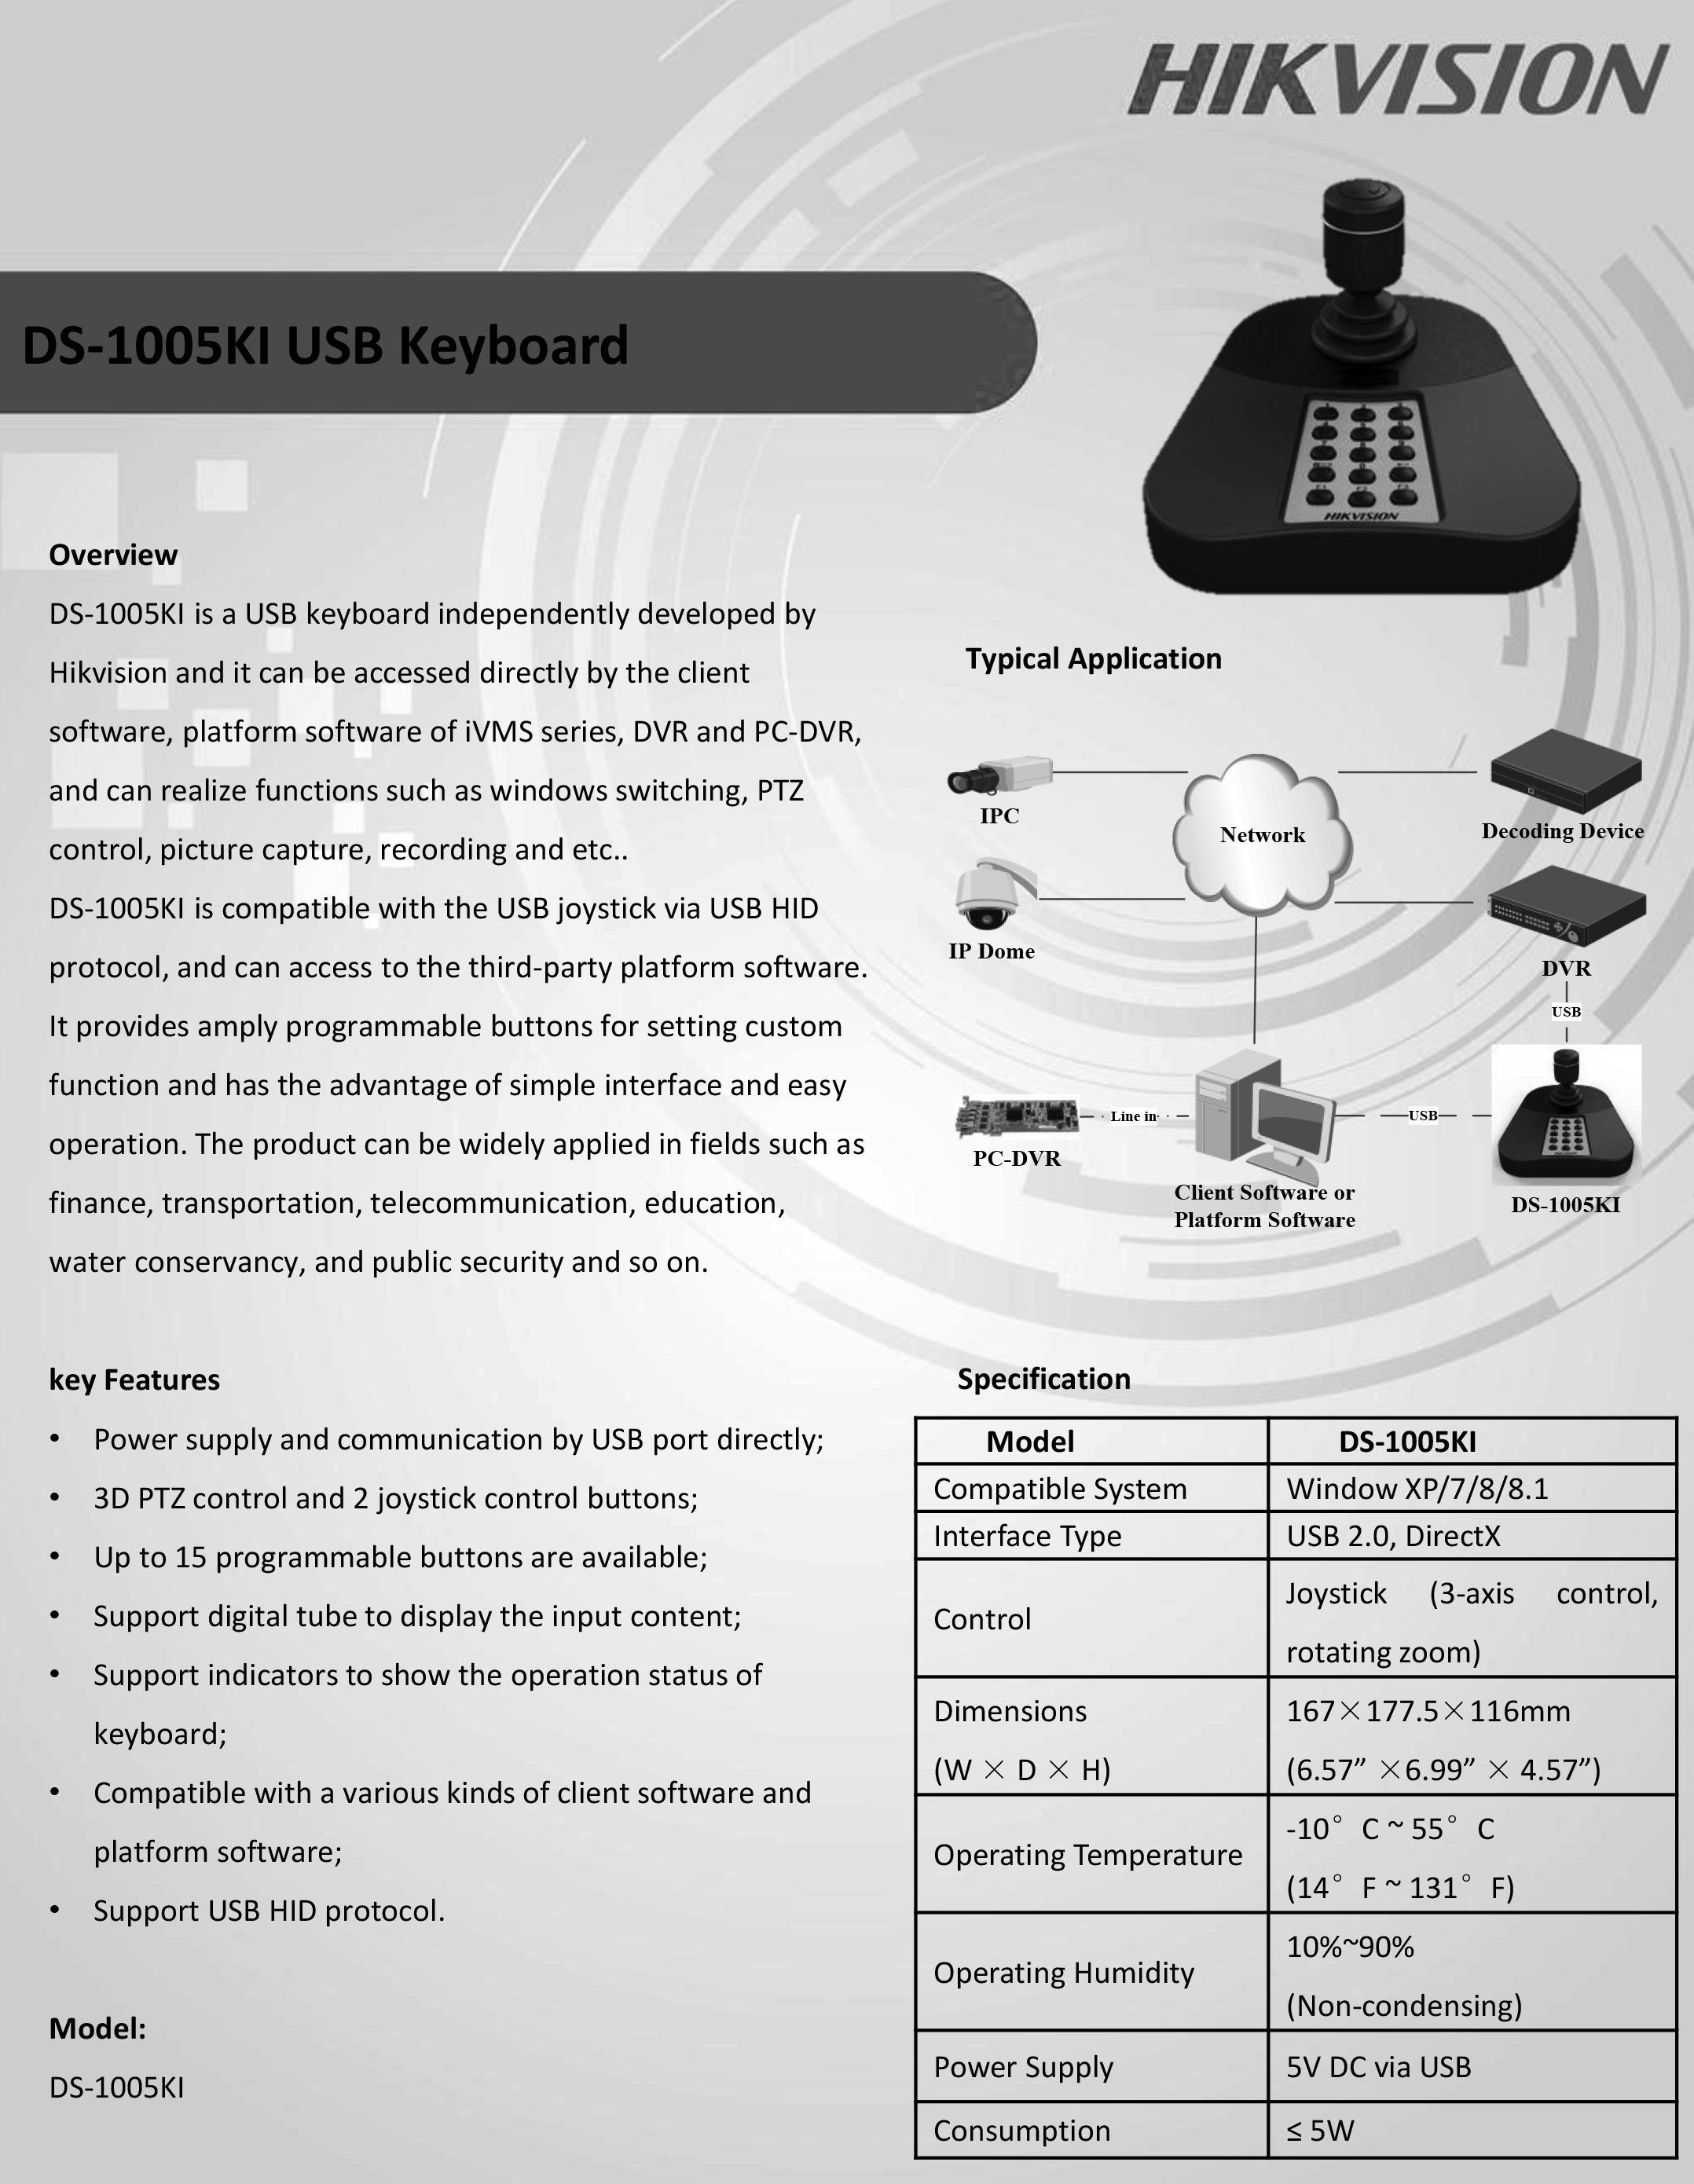 EN_Spec-of-DS-1005KI-Keyboard_V1.0build20151221.jpg